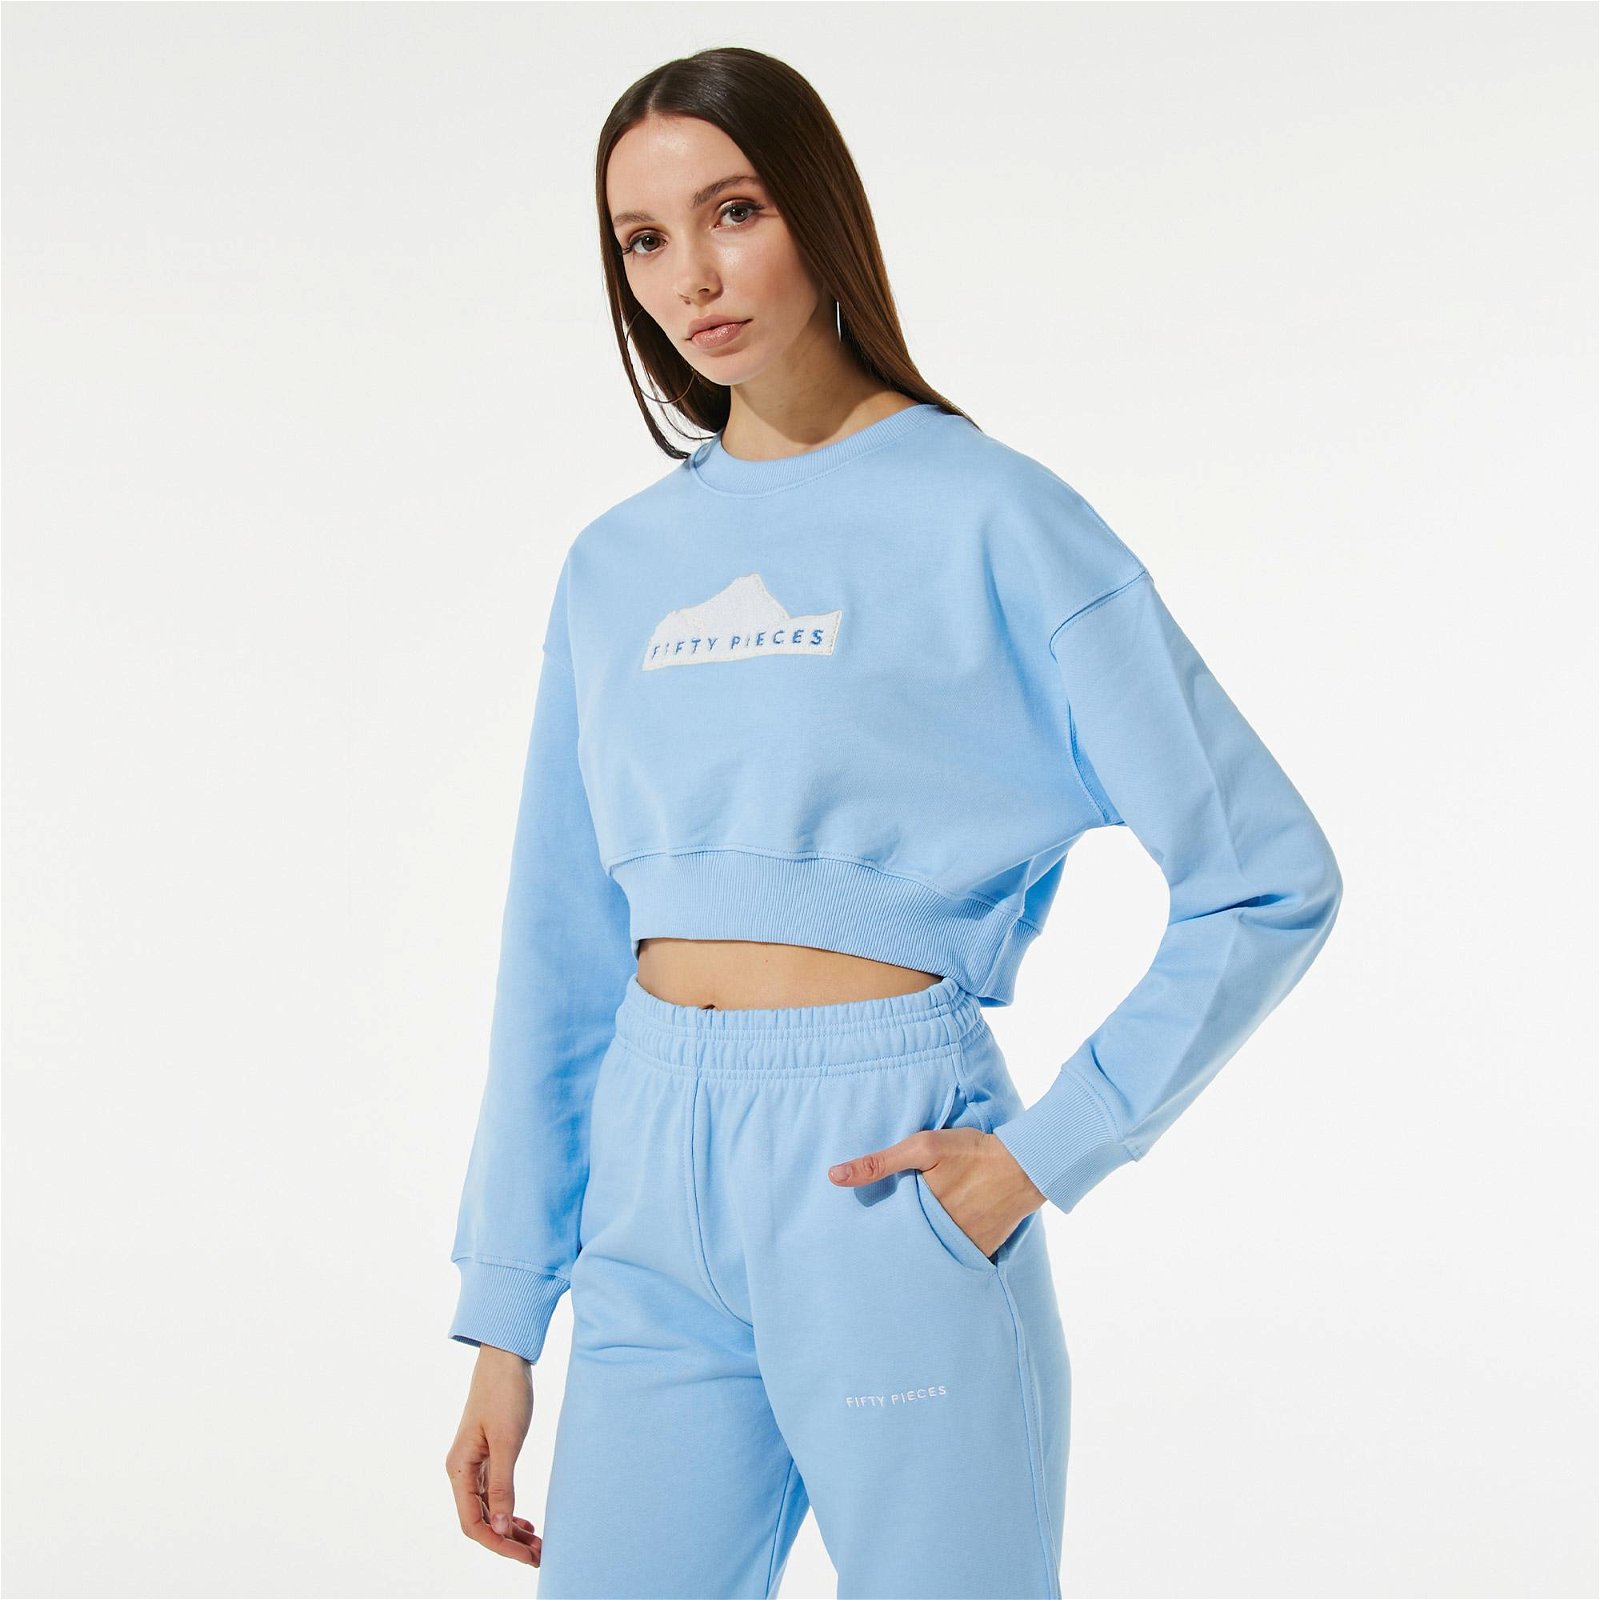 Fifty Pieces Kadın Mavi Crop Sweatshirt